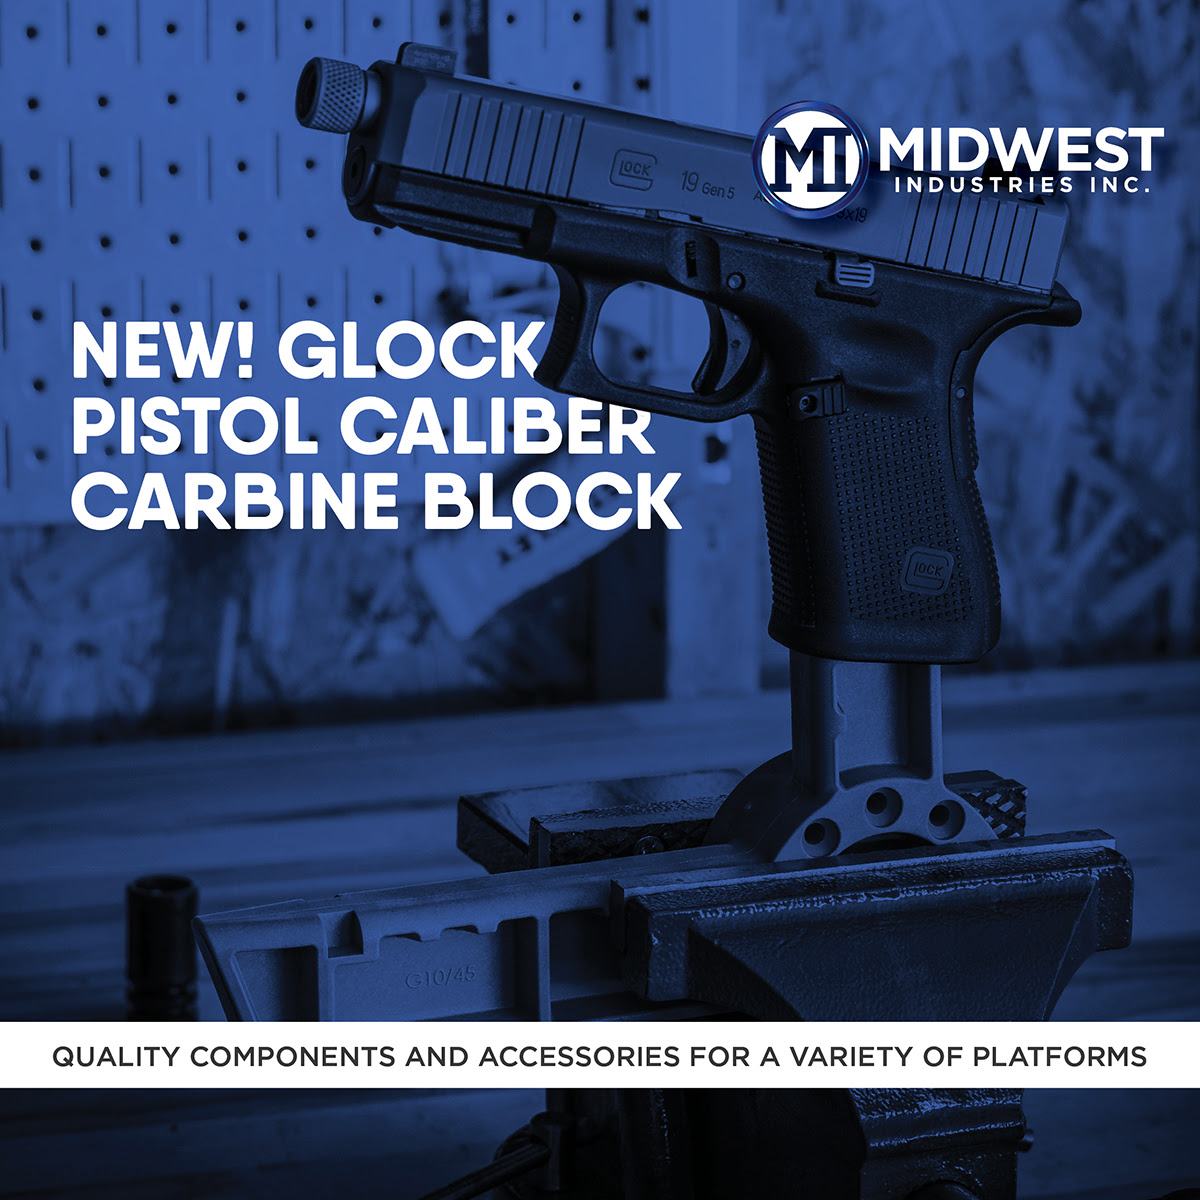 Midwest Industries Introduces the Glock Pistol Caliber Carbine Block